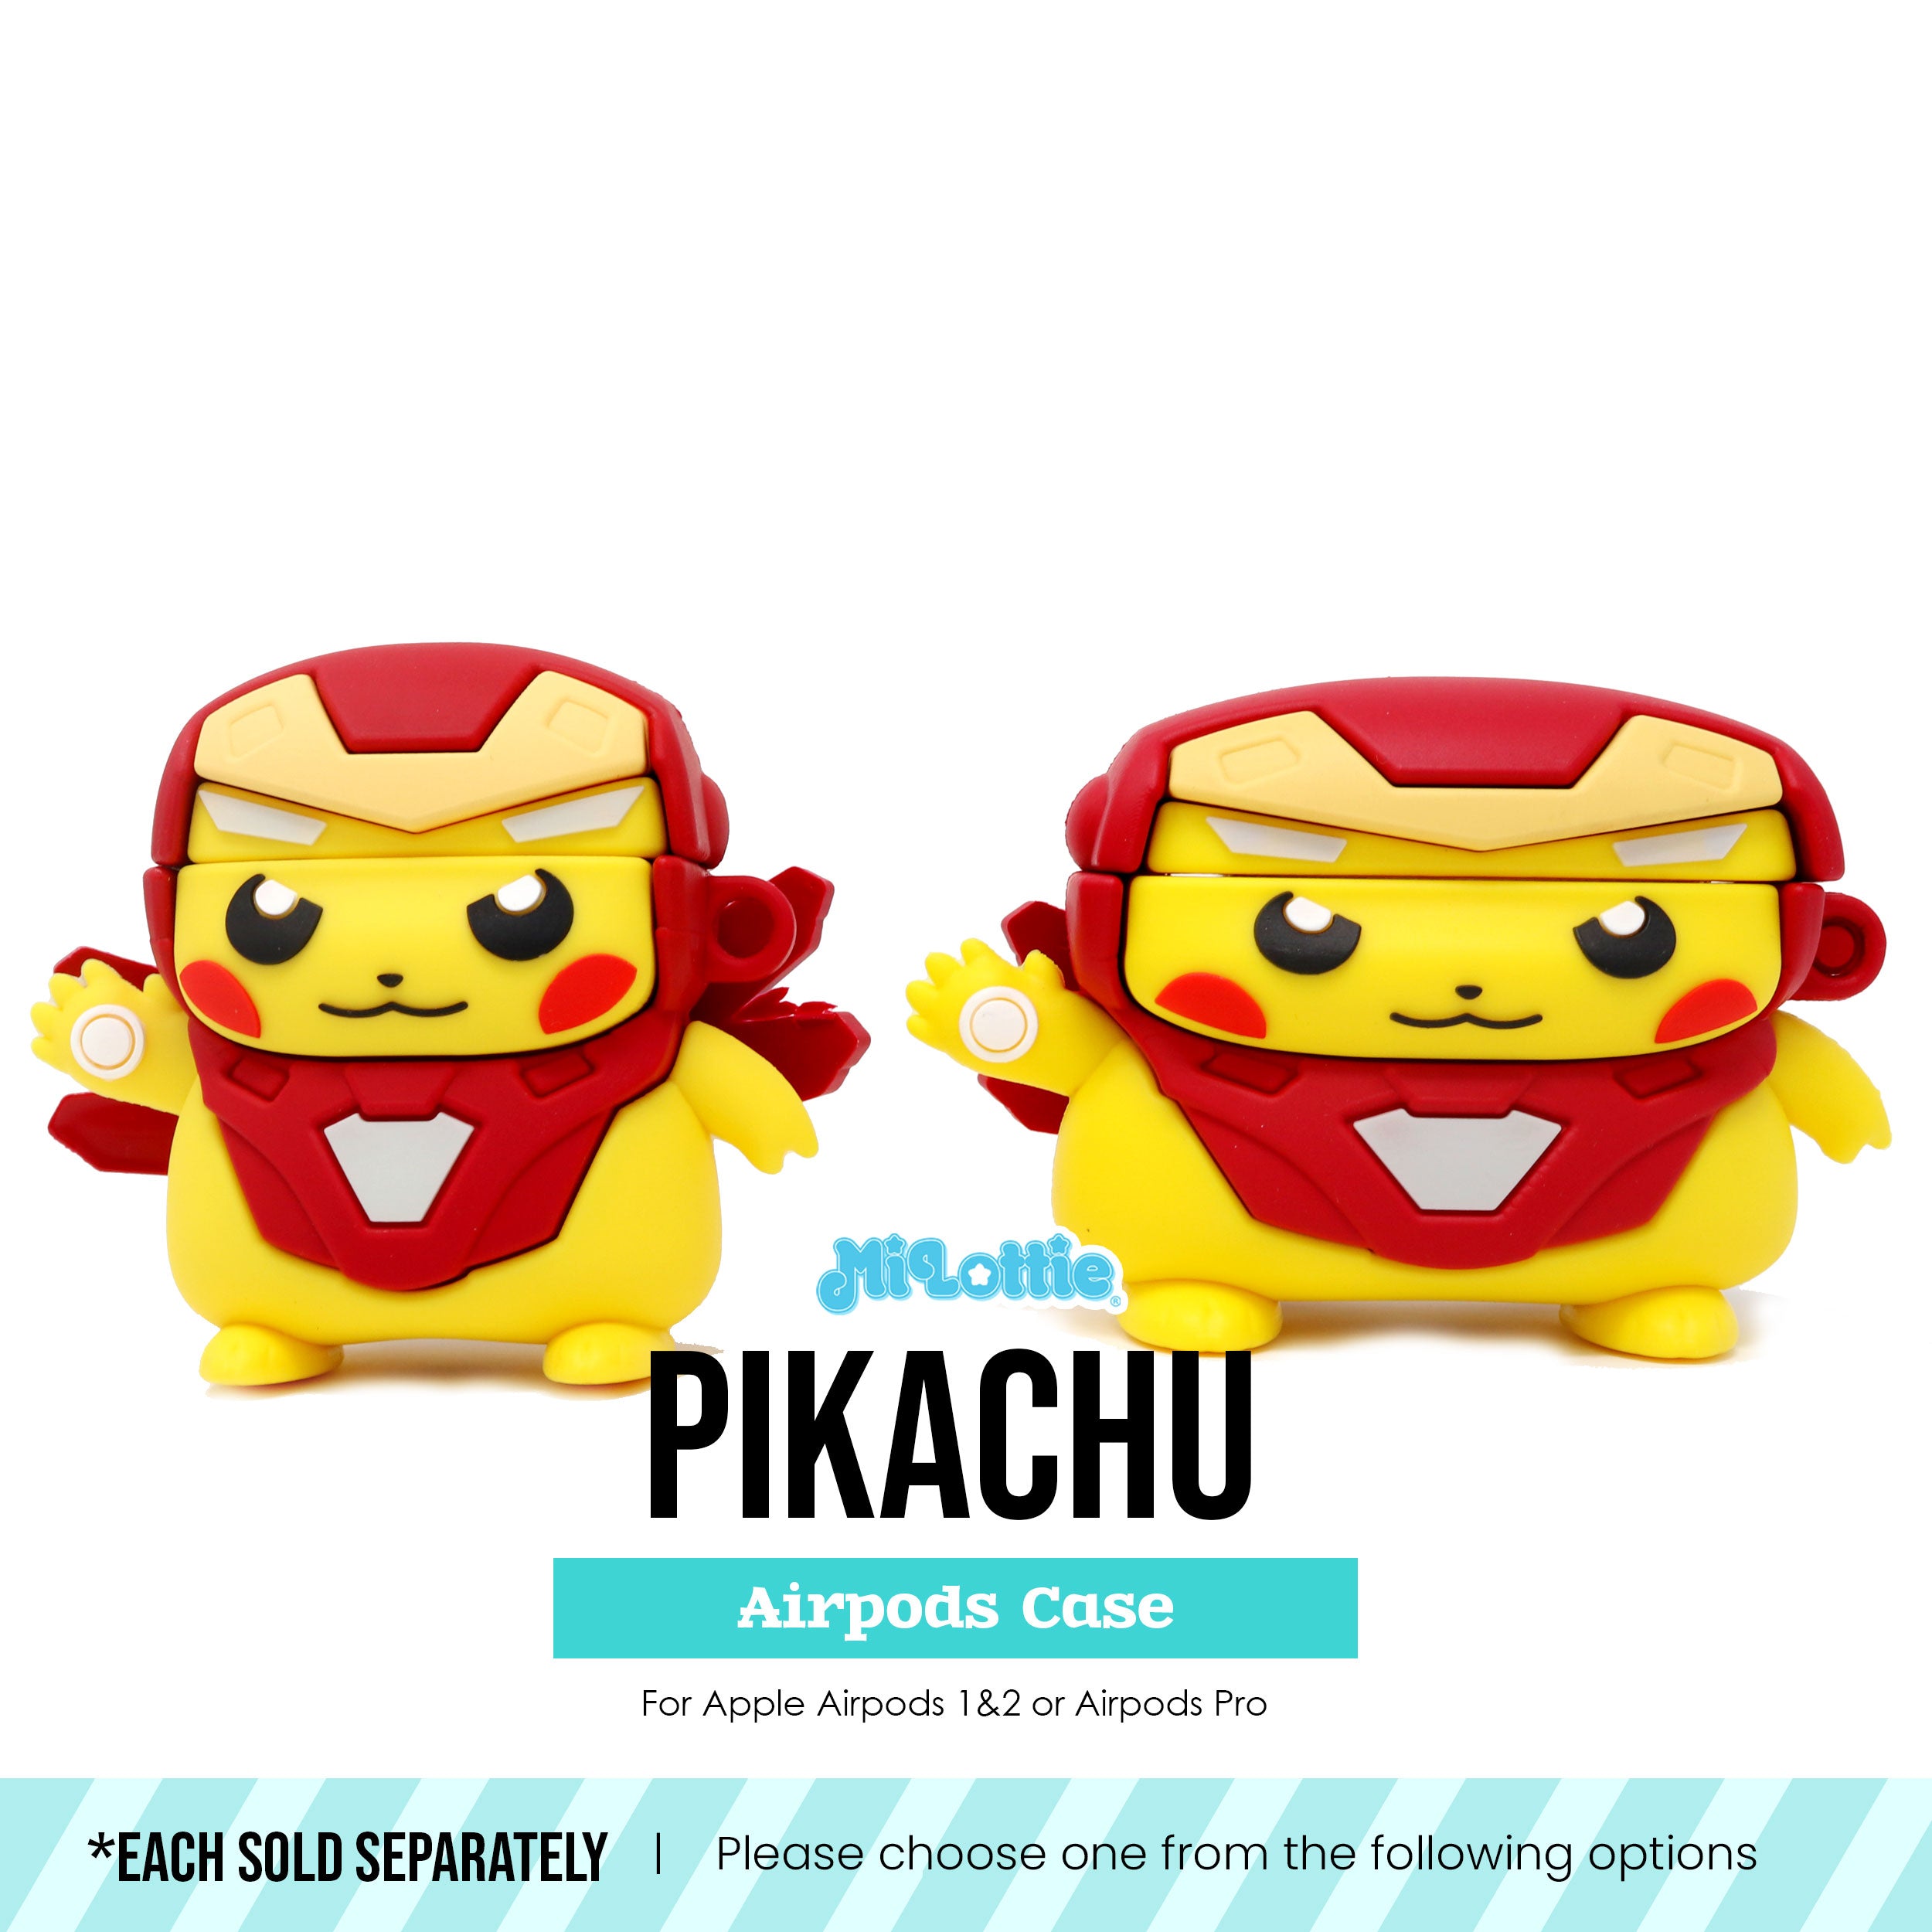 Pikachu in Iron man costume Pokemon Airpods Case - 0